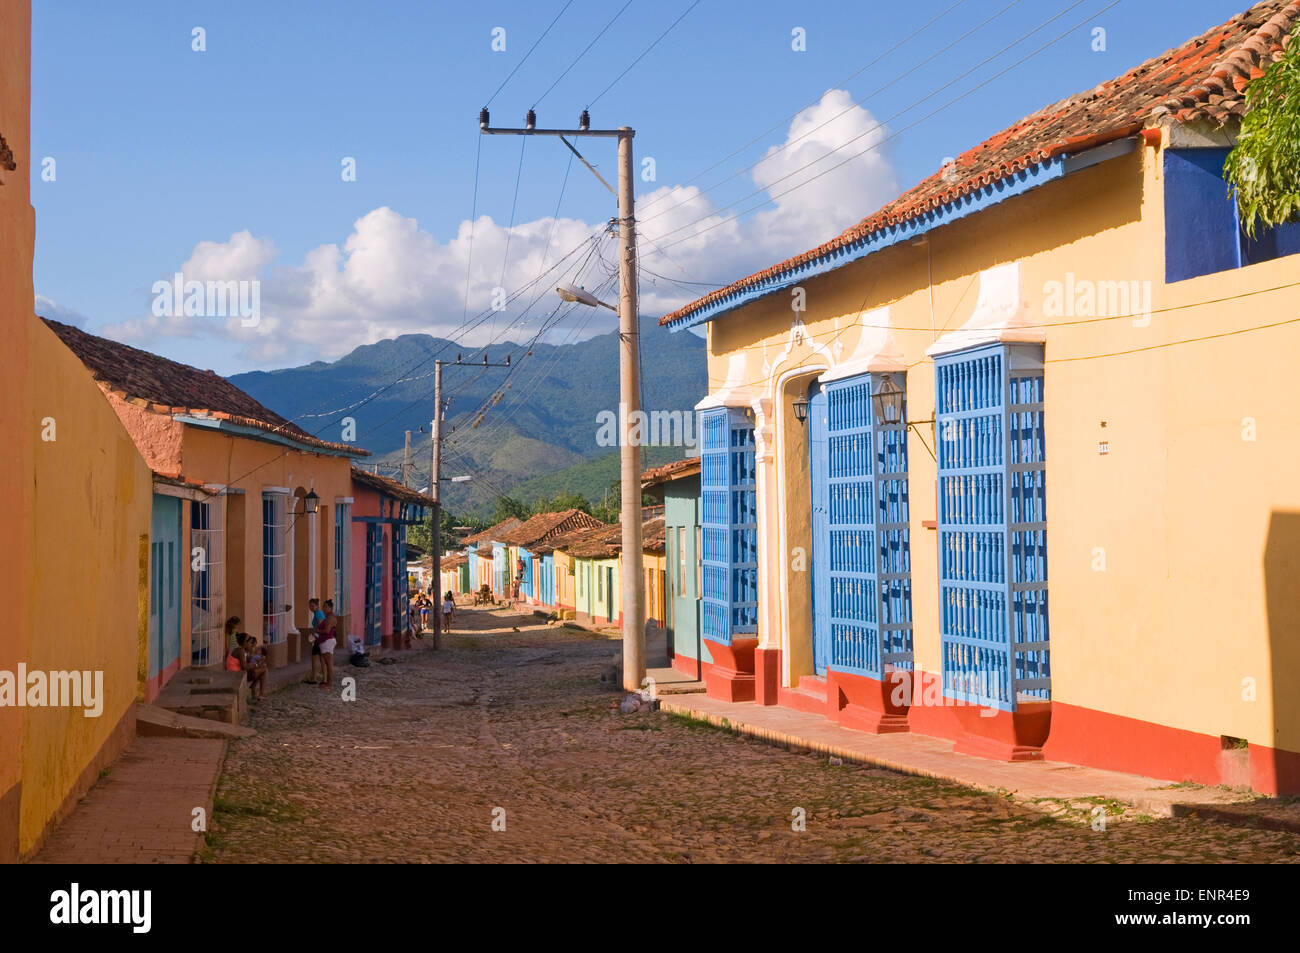 A cobbled street with colourful houses in Trinidad de Cuba, Cuba Stock Photo